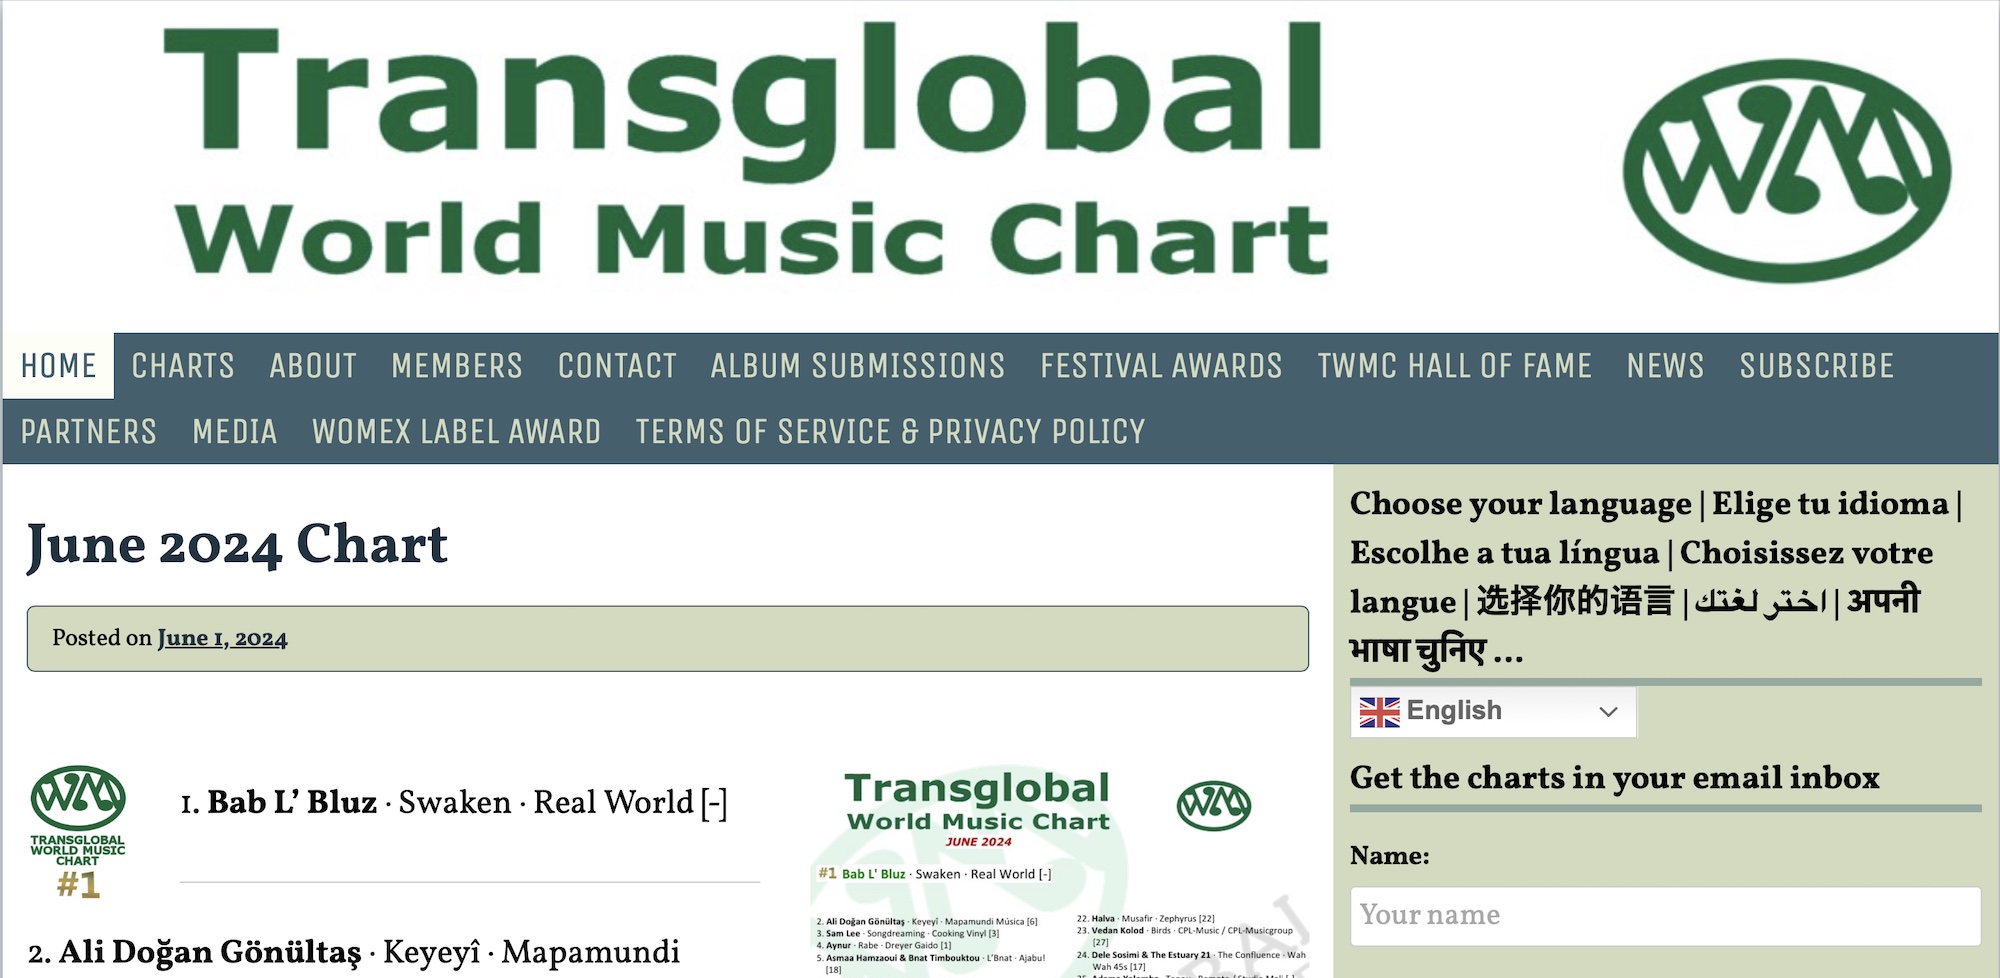 Transglobal World Music Chart Jun. 2024